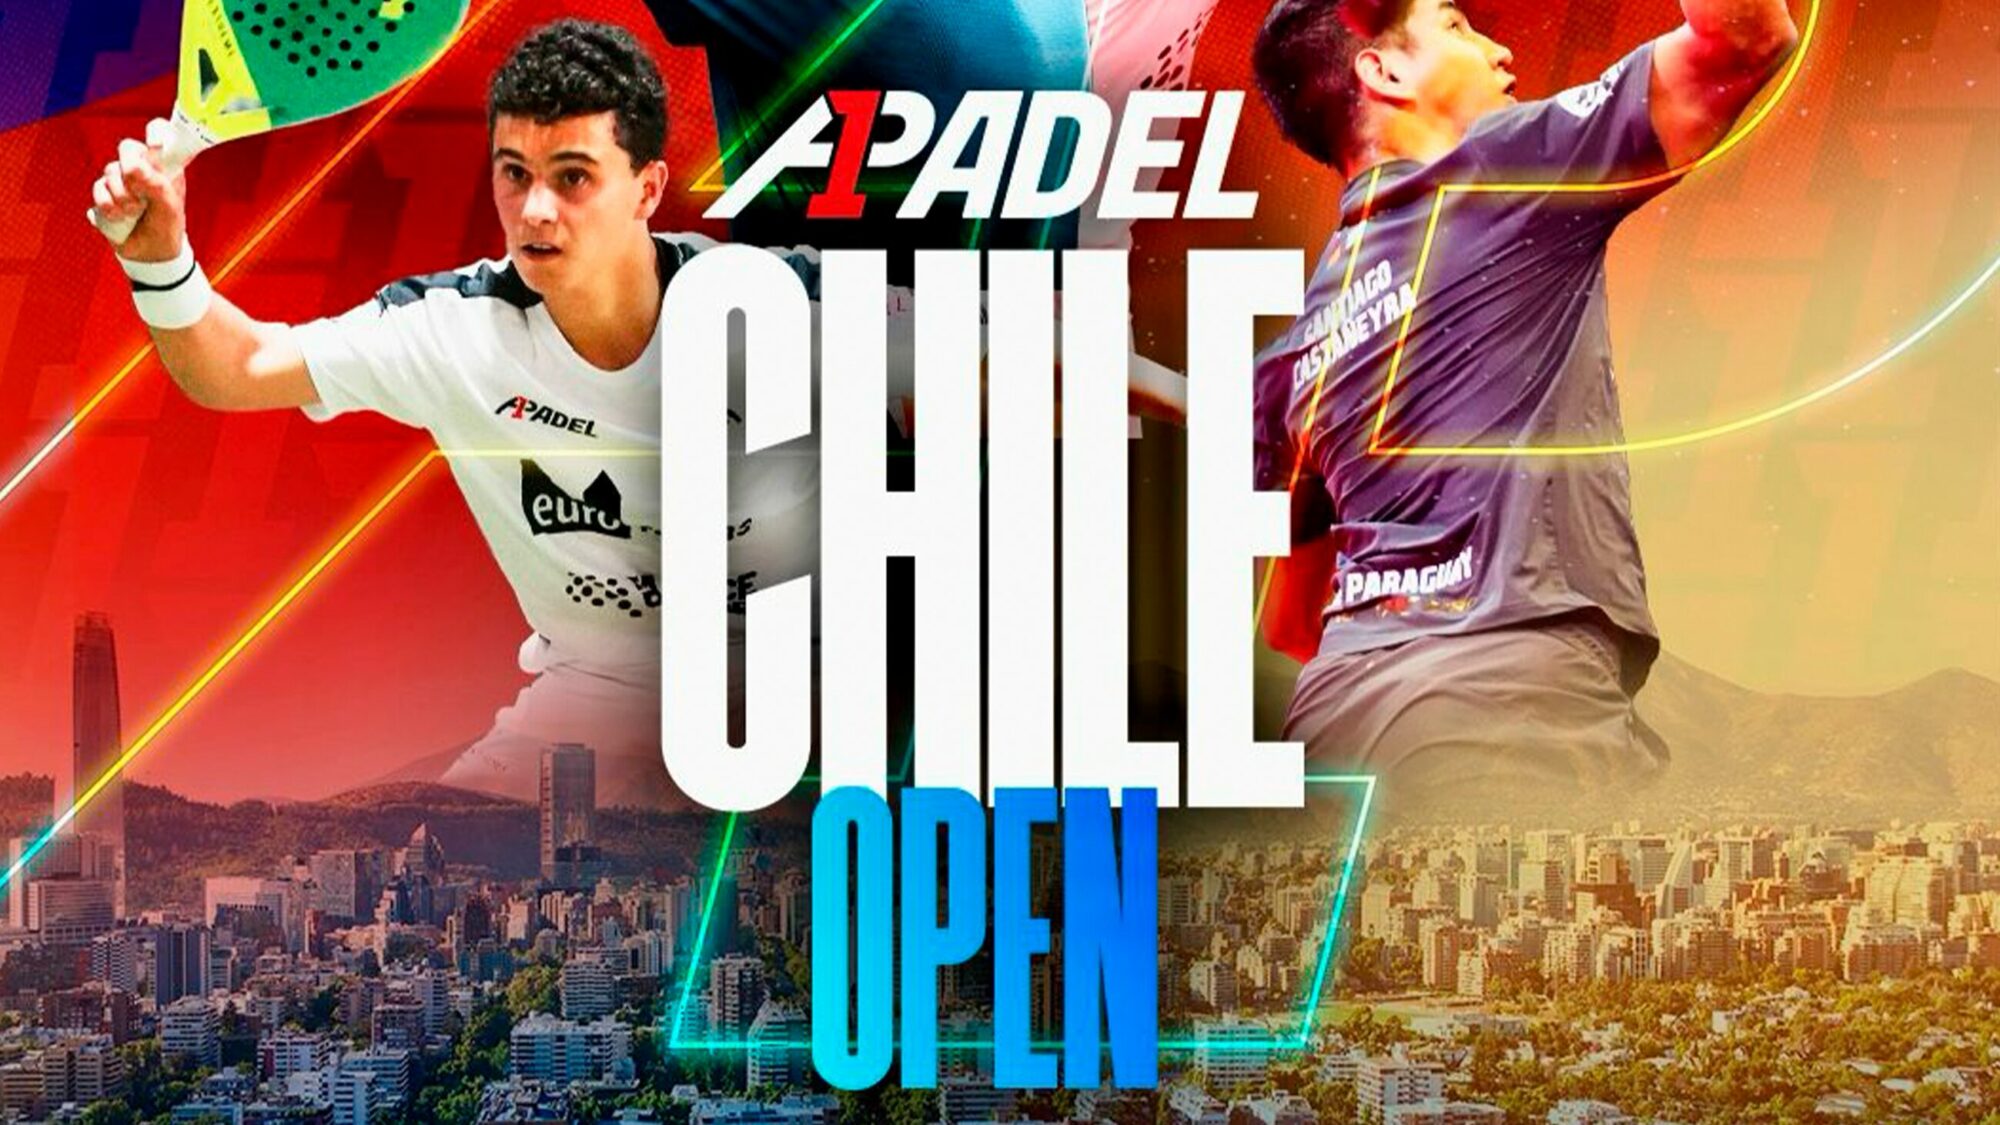 A1 Chile Open – Sorteio principal revelado